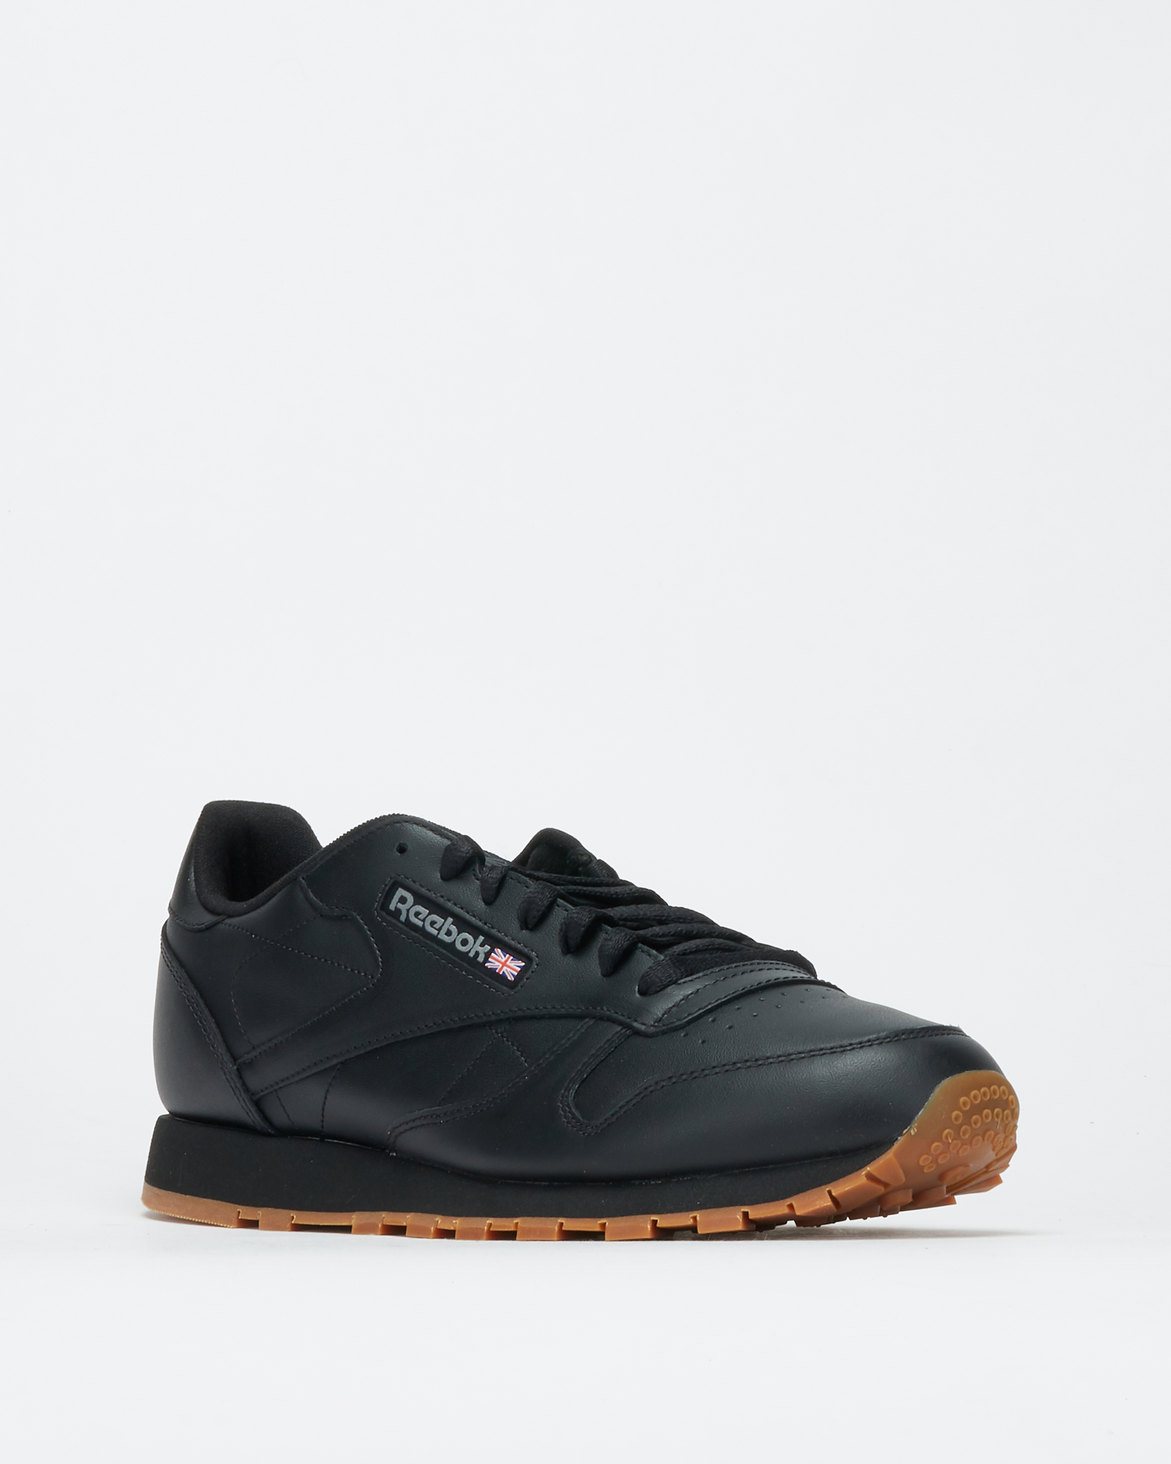 Reebok Classic Leather Sneakers Black | Zando